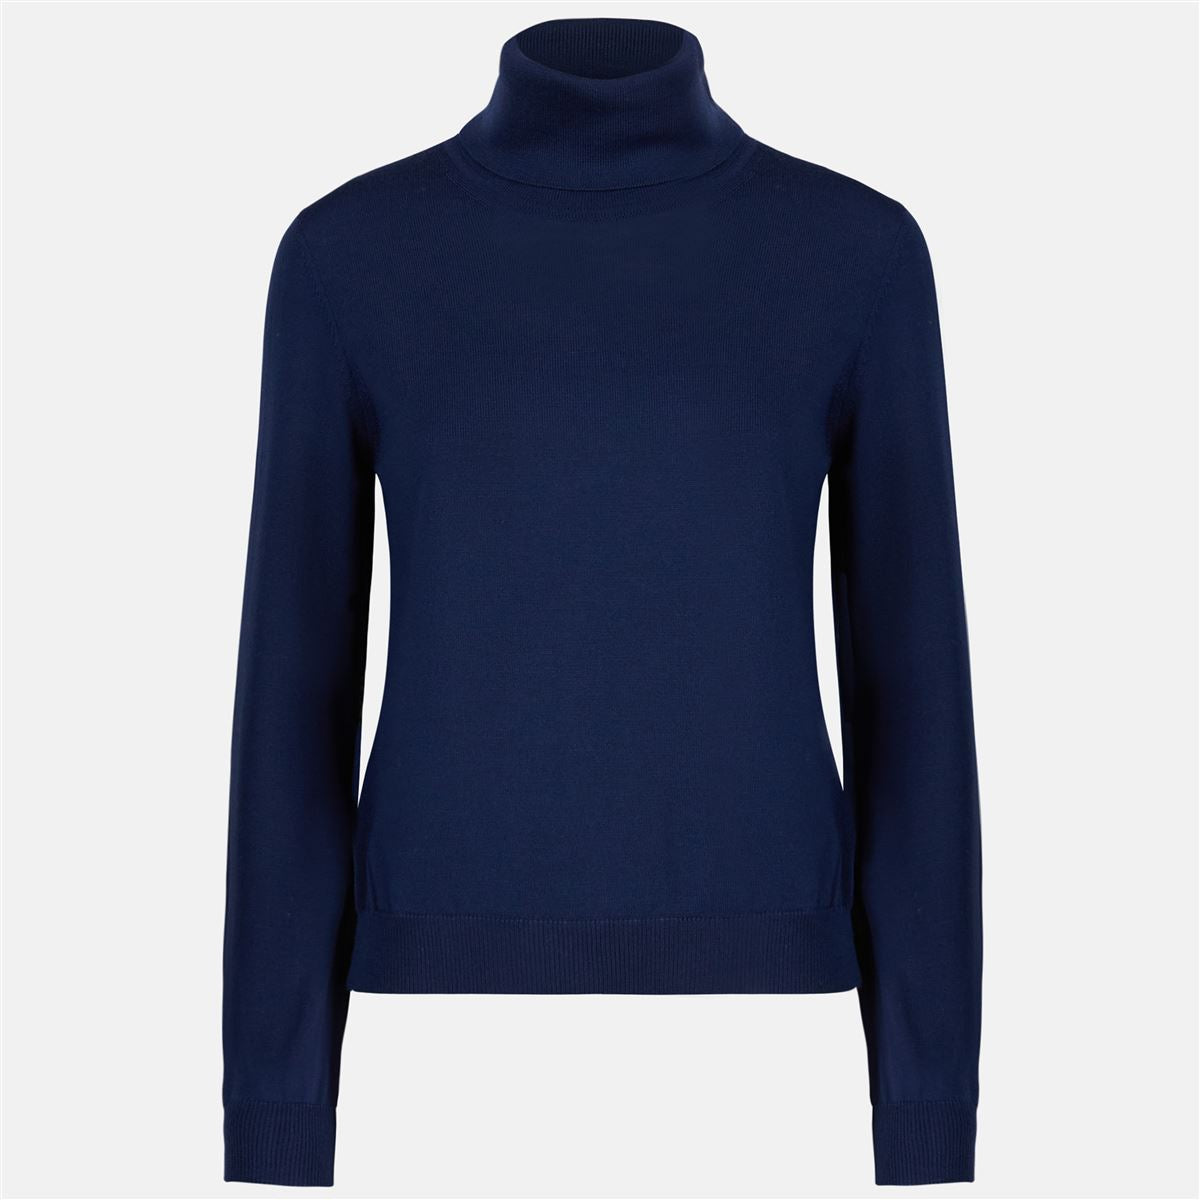 SUSIE MERINO - Knitwear - Pull  Over - Woman - Blue